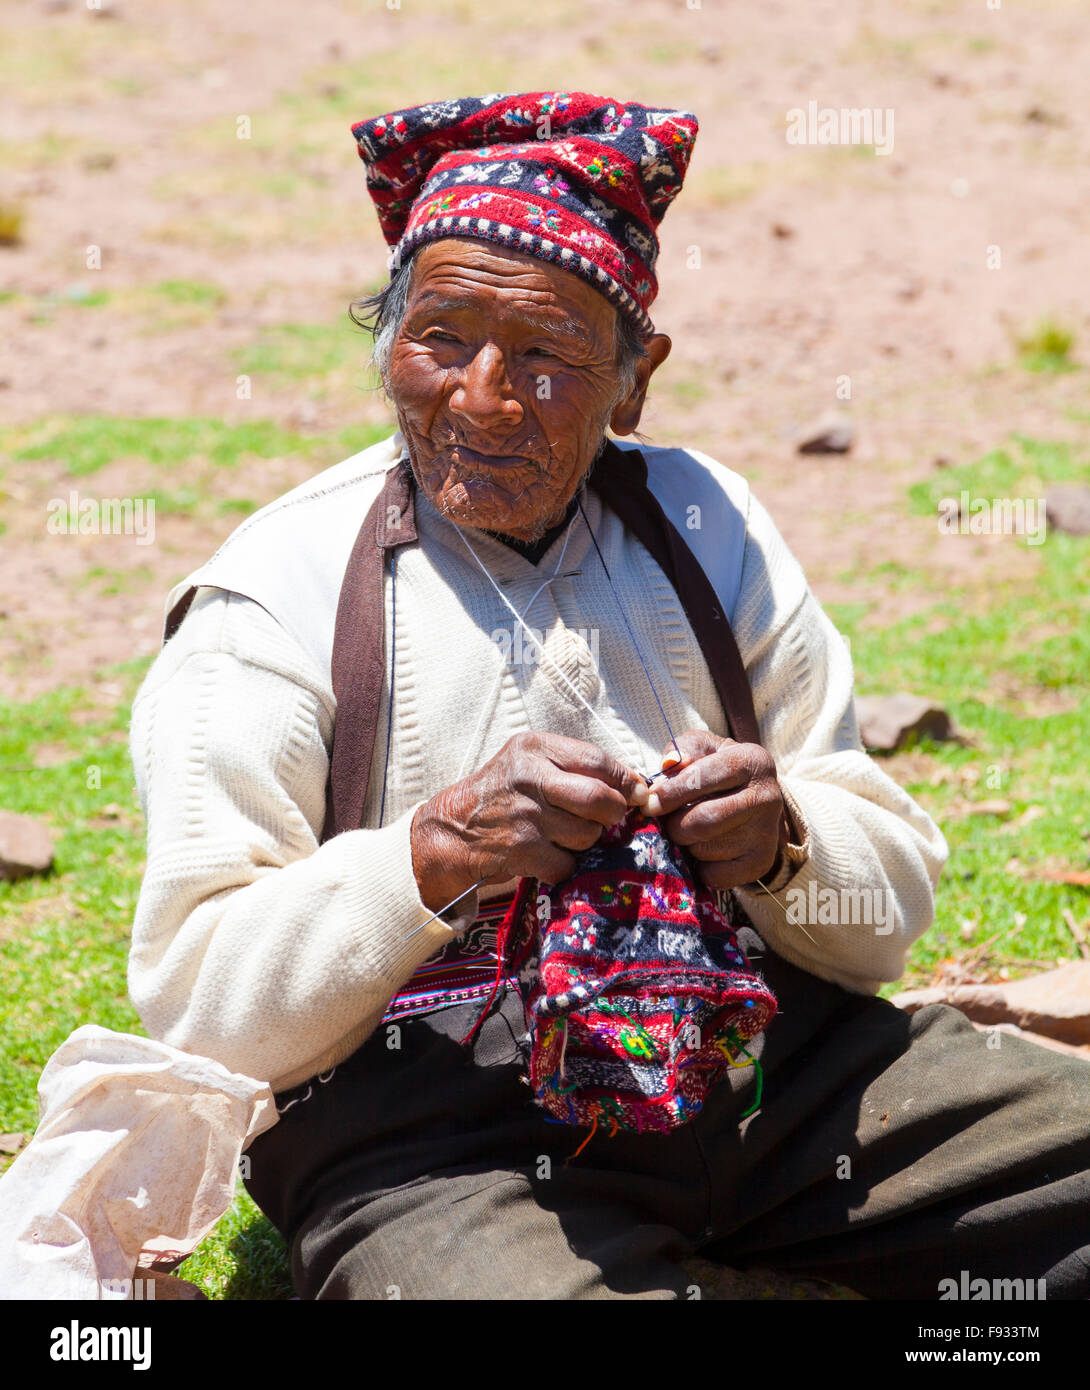 Man stricken - Tarquile-Island - Peru Stockfoto